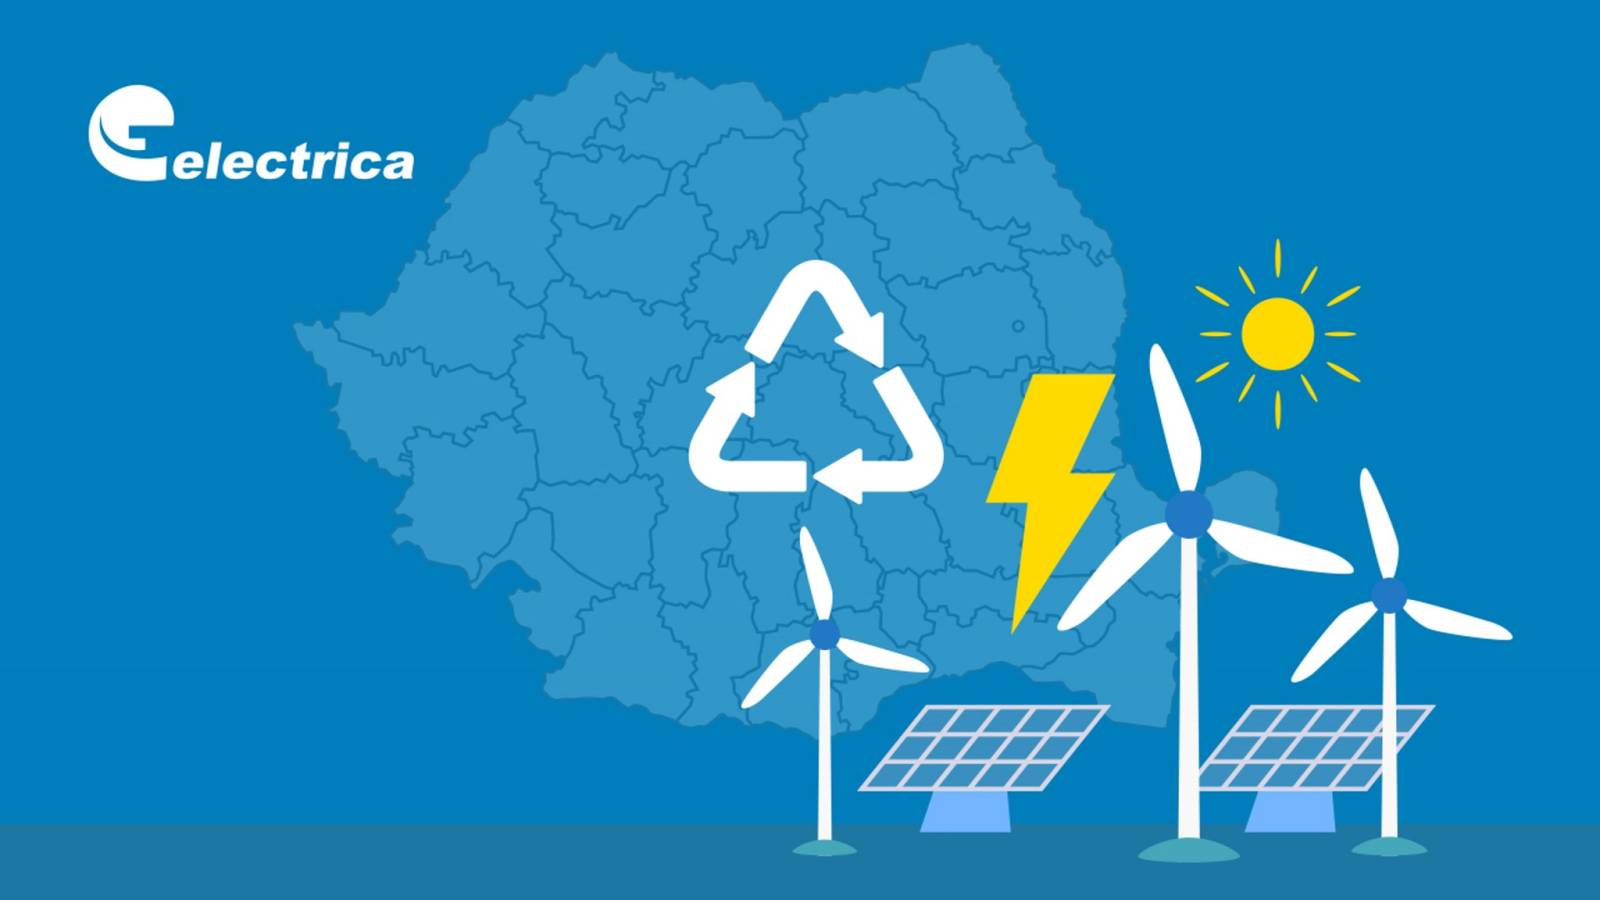 Electrica Anuntul ATENTIONARE Vizeaza Oficial Clientii Toata Romania